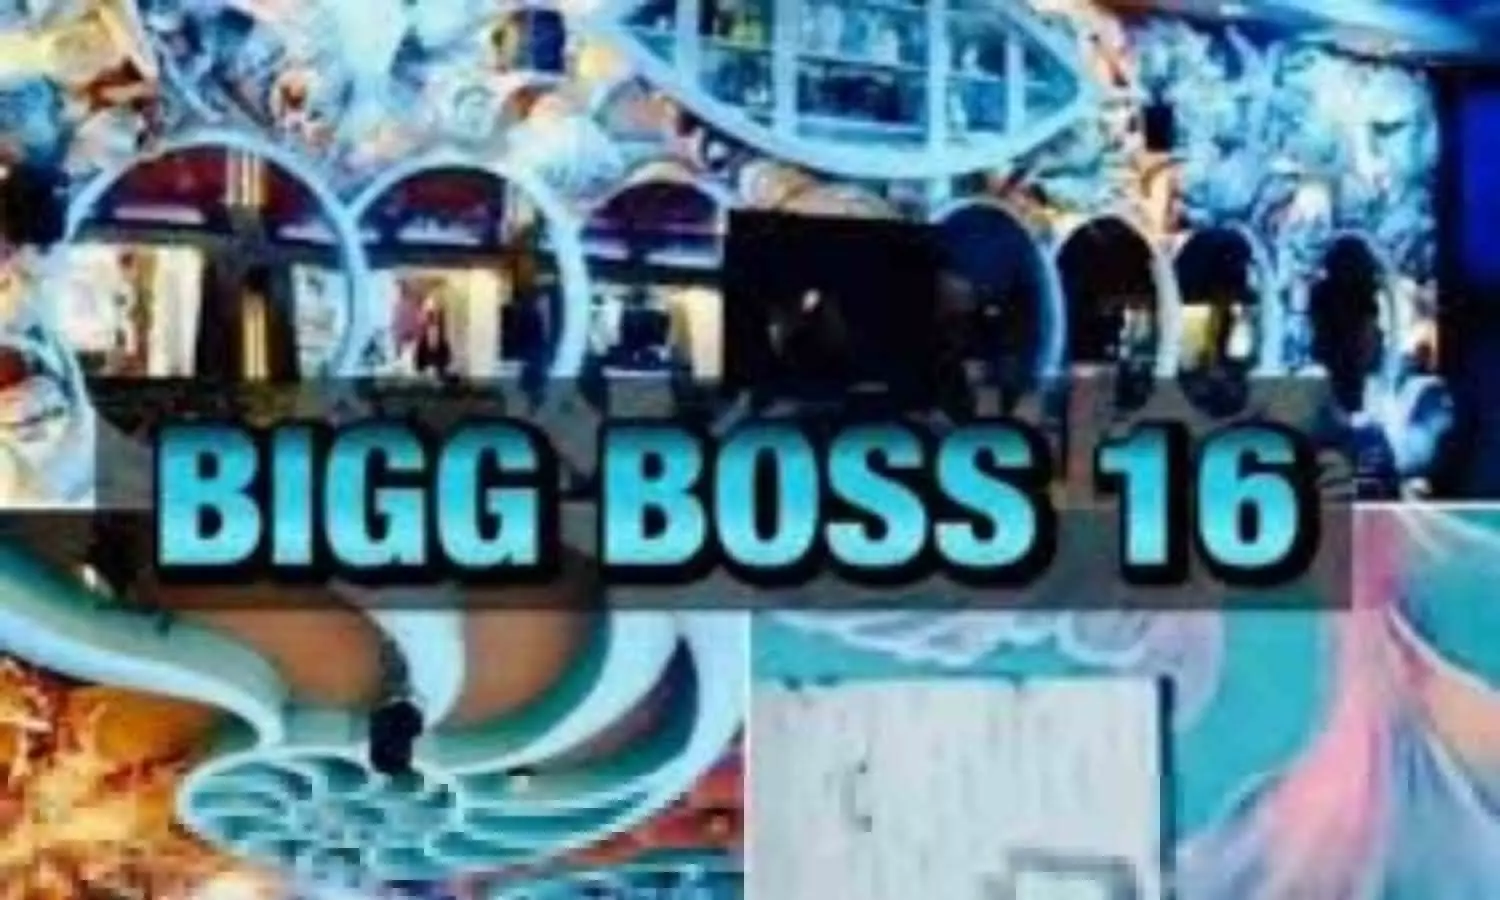 Bigg Boss 16 Final Contestant List